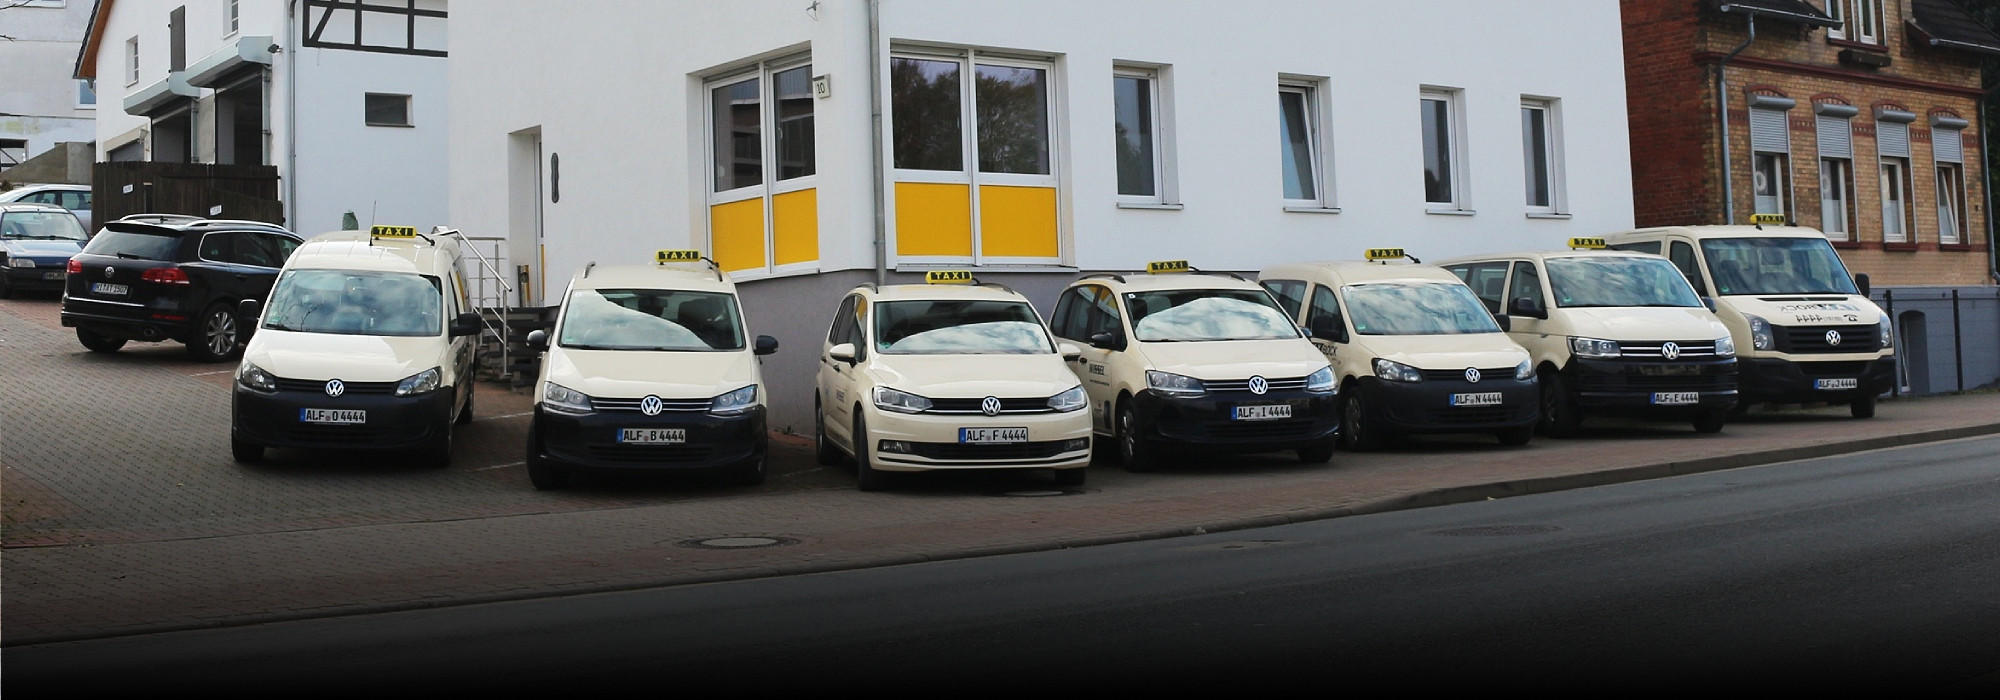 Bilder Taxi-Bock-Alfeld